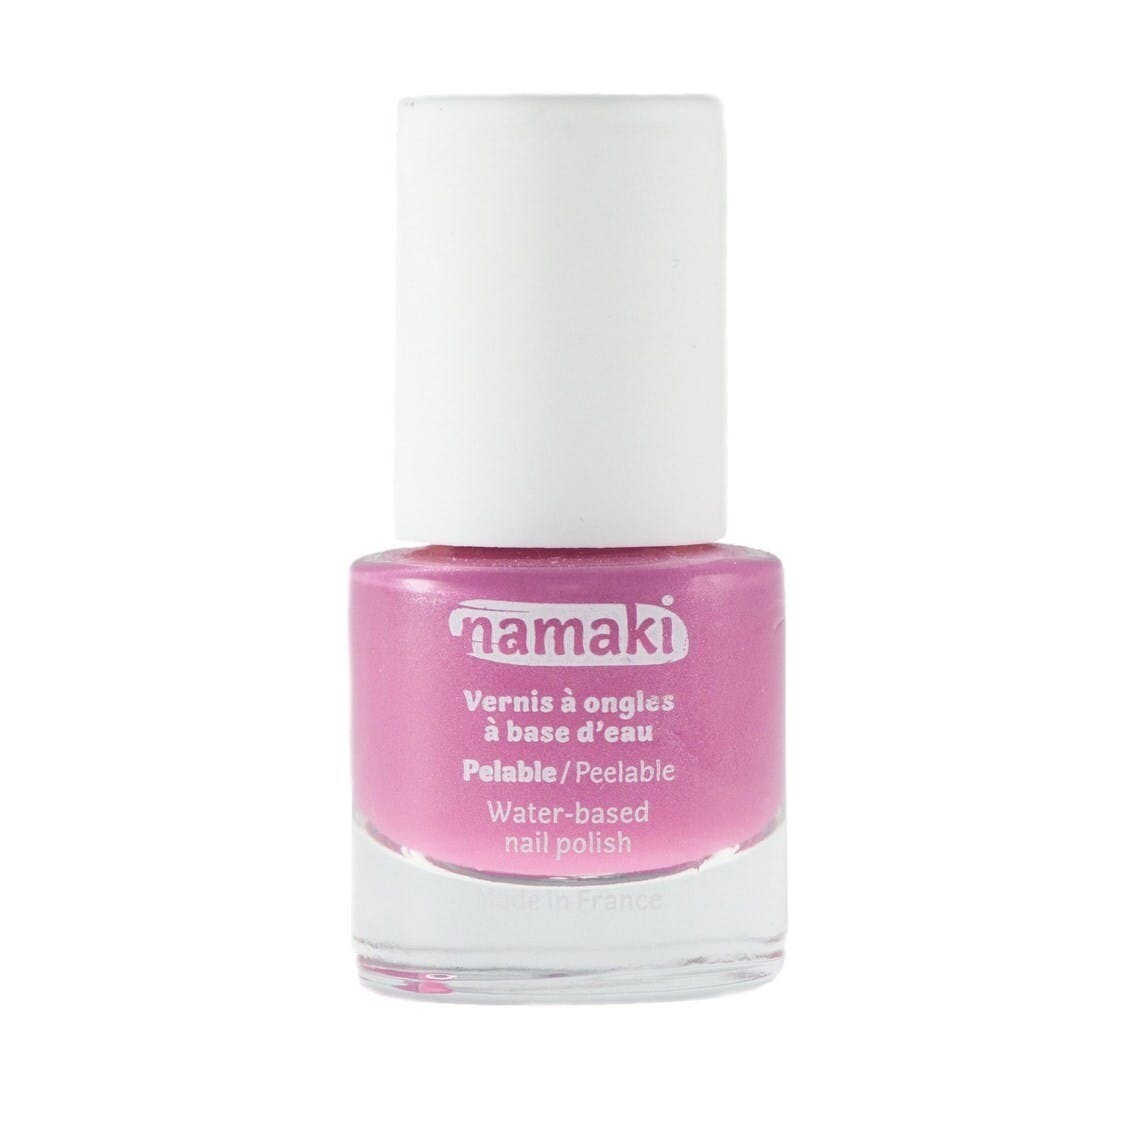 Namaki cosmetics - Water-based nail polish 02 - Pink